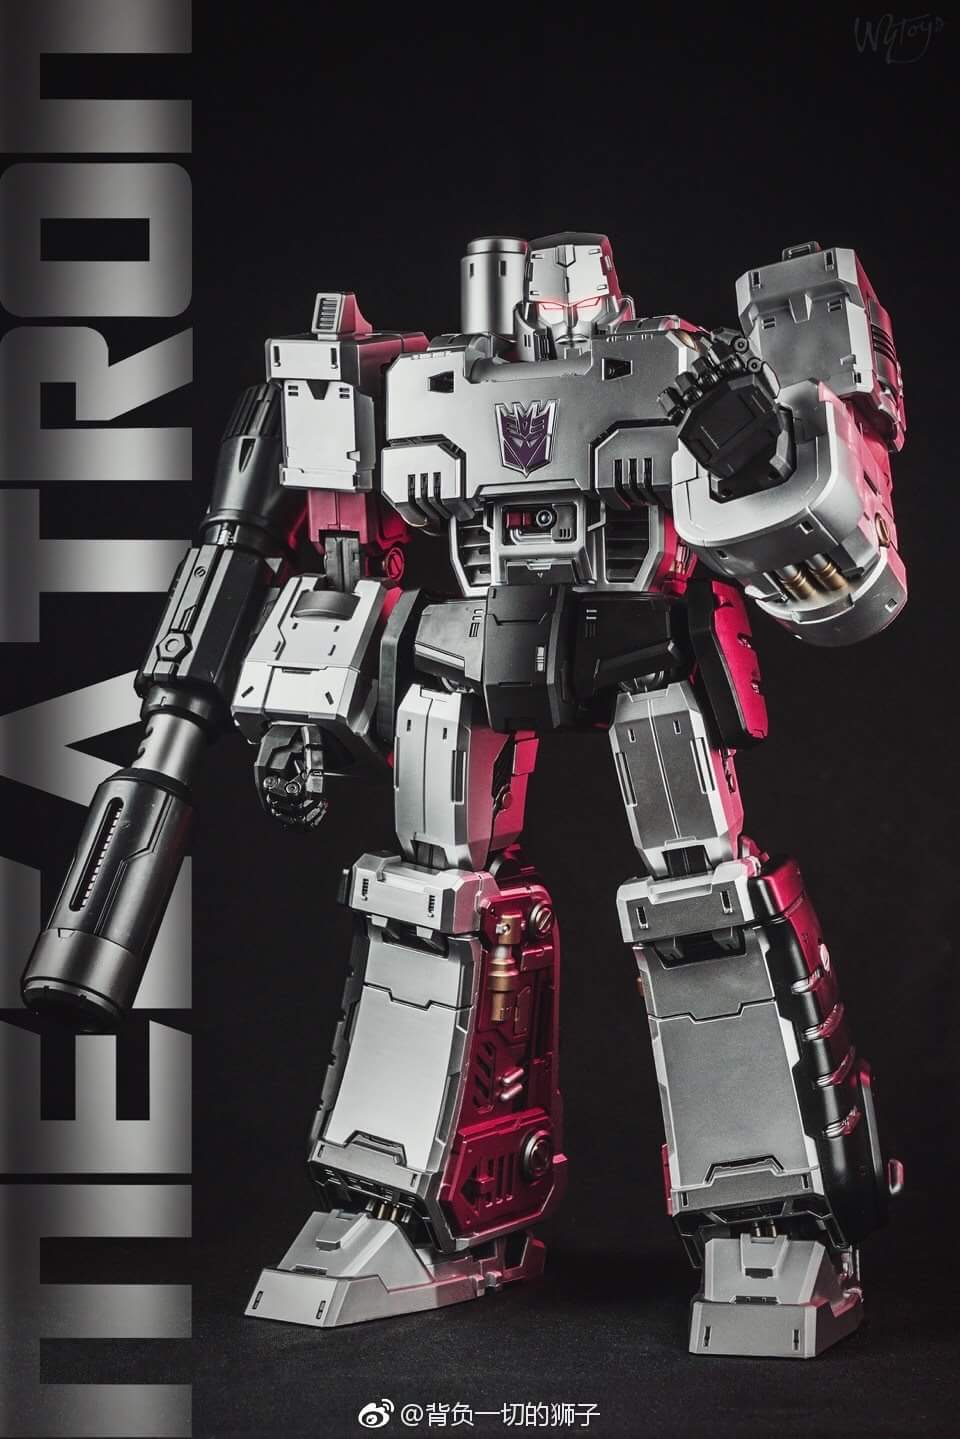 Figurines Transformers G1 (articulé, non transformable) ― Par ThreeZero, R.E.D, Super7, Toys Alliance, etc - Page 5 JYwMDVhj_o